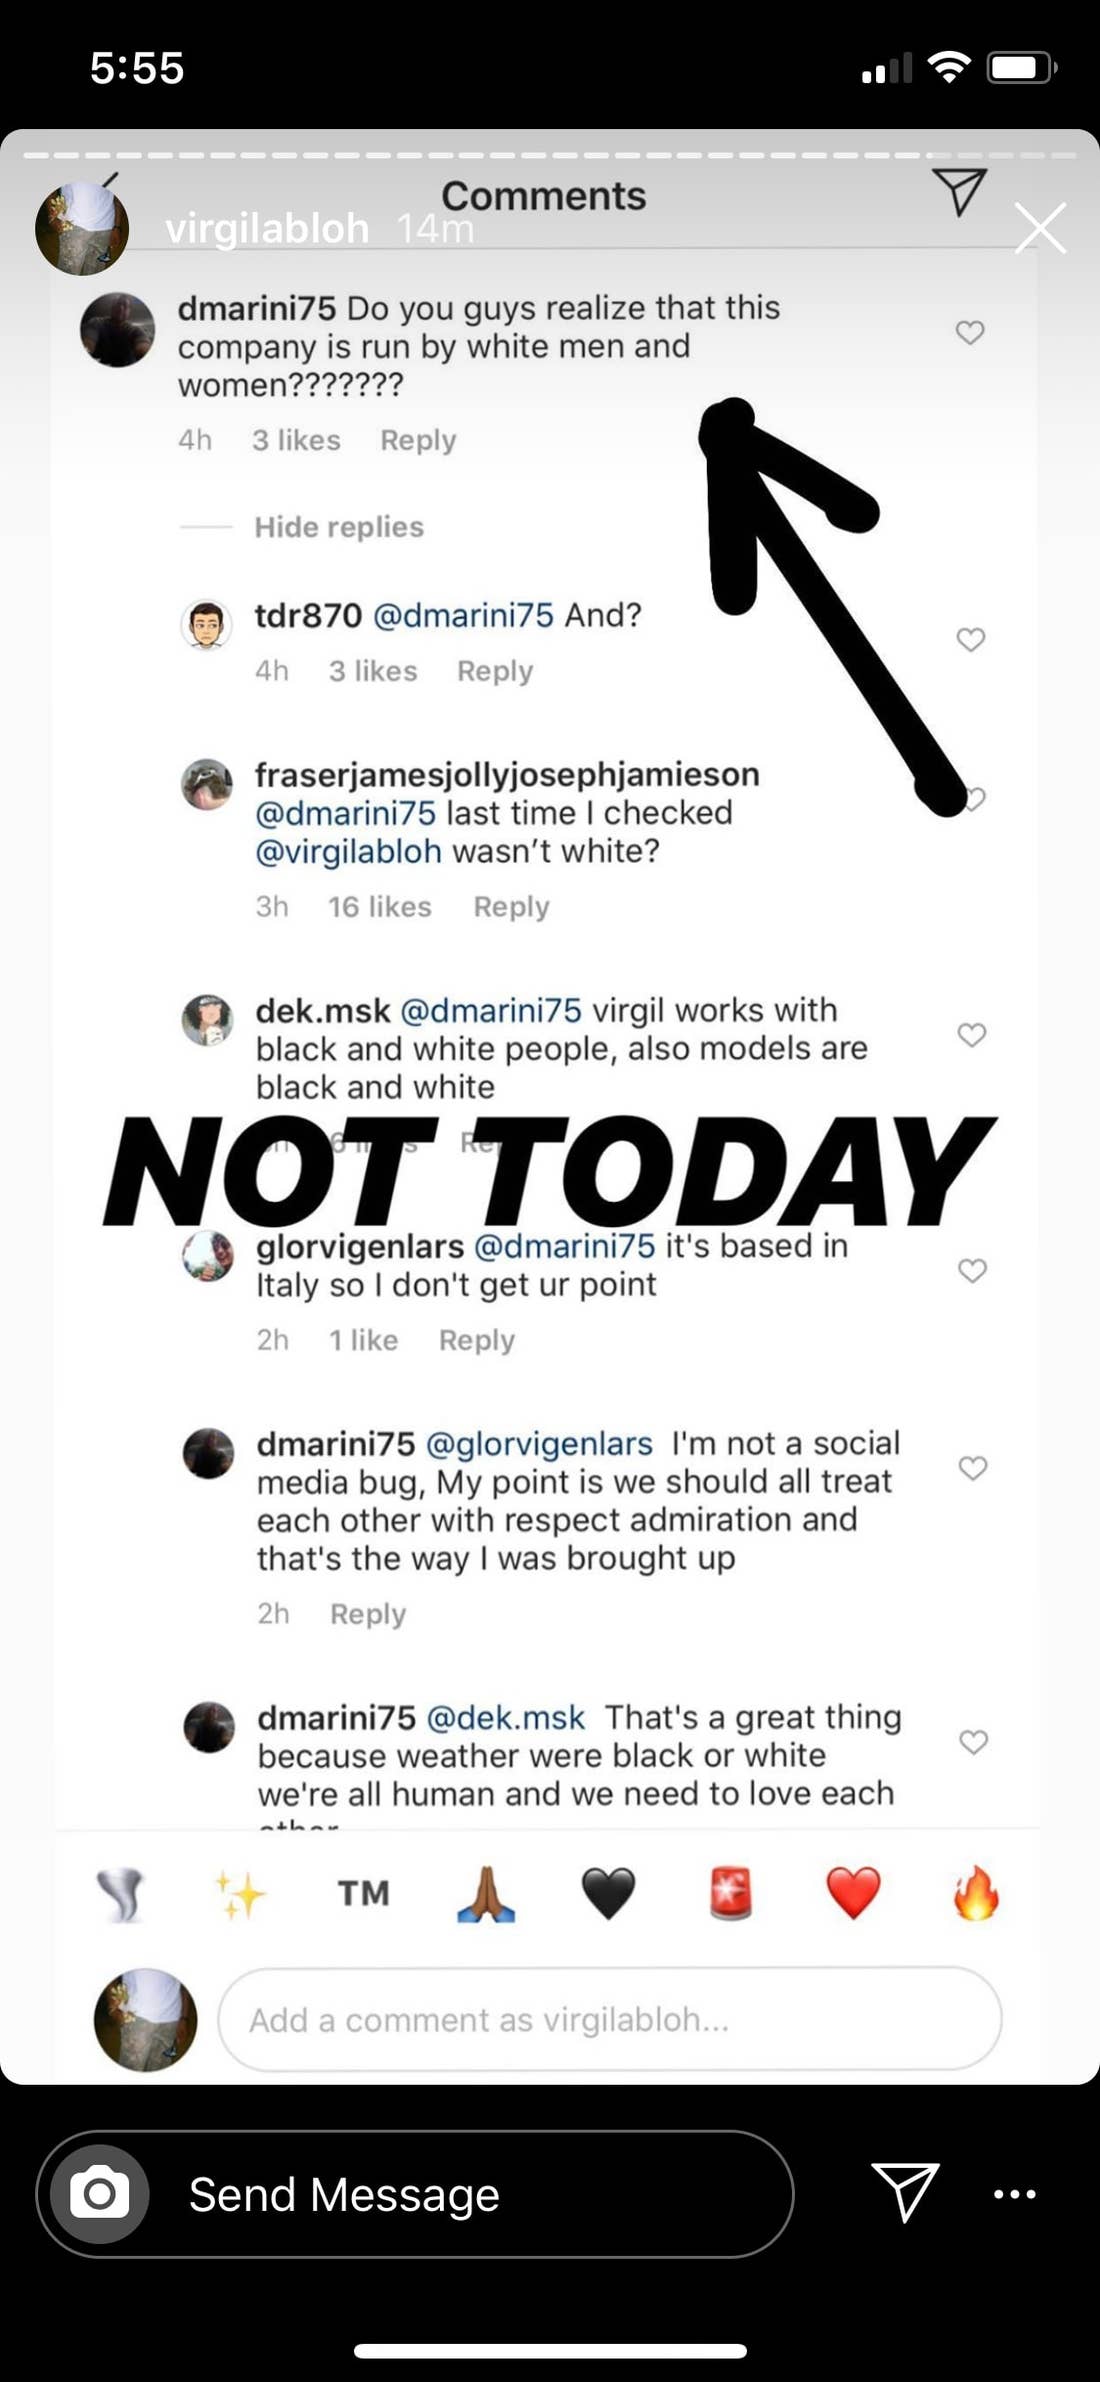 Virgil Abloh Addresses the Backlash over His Instagram Comments